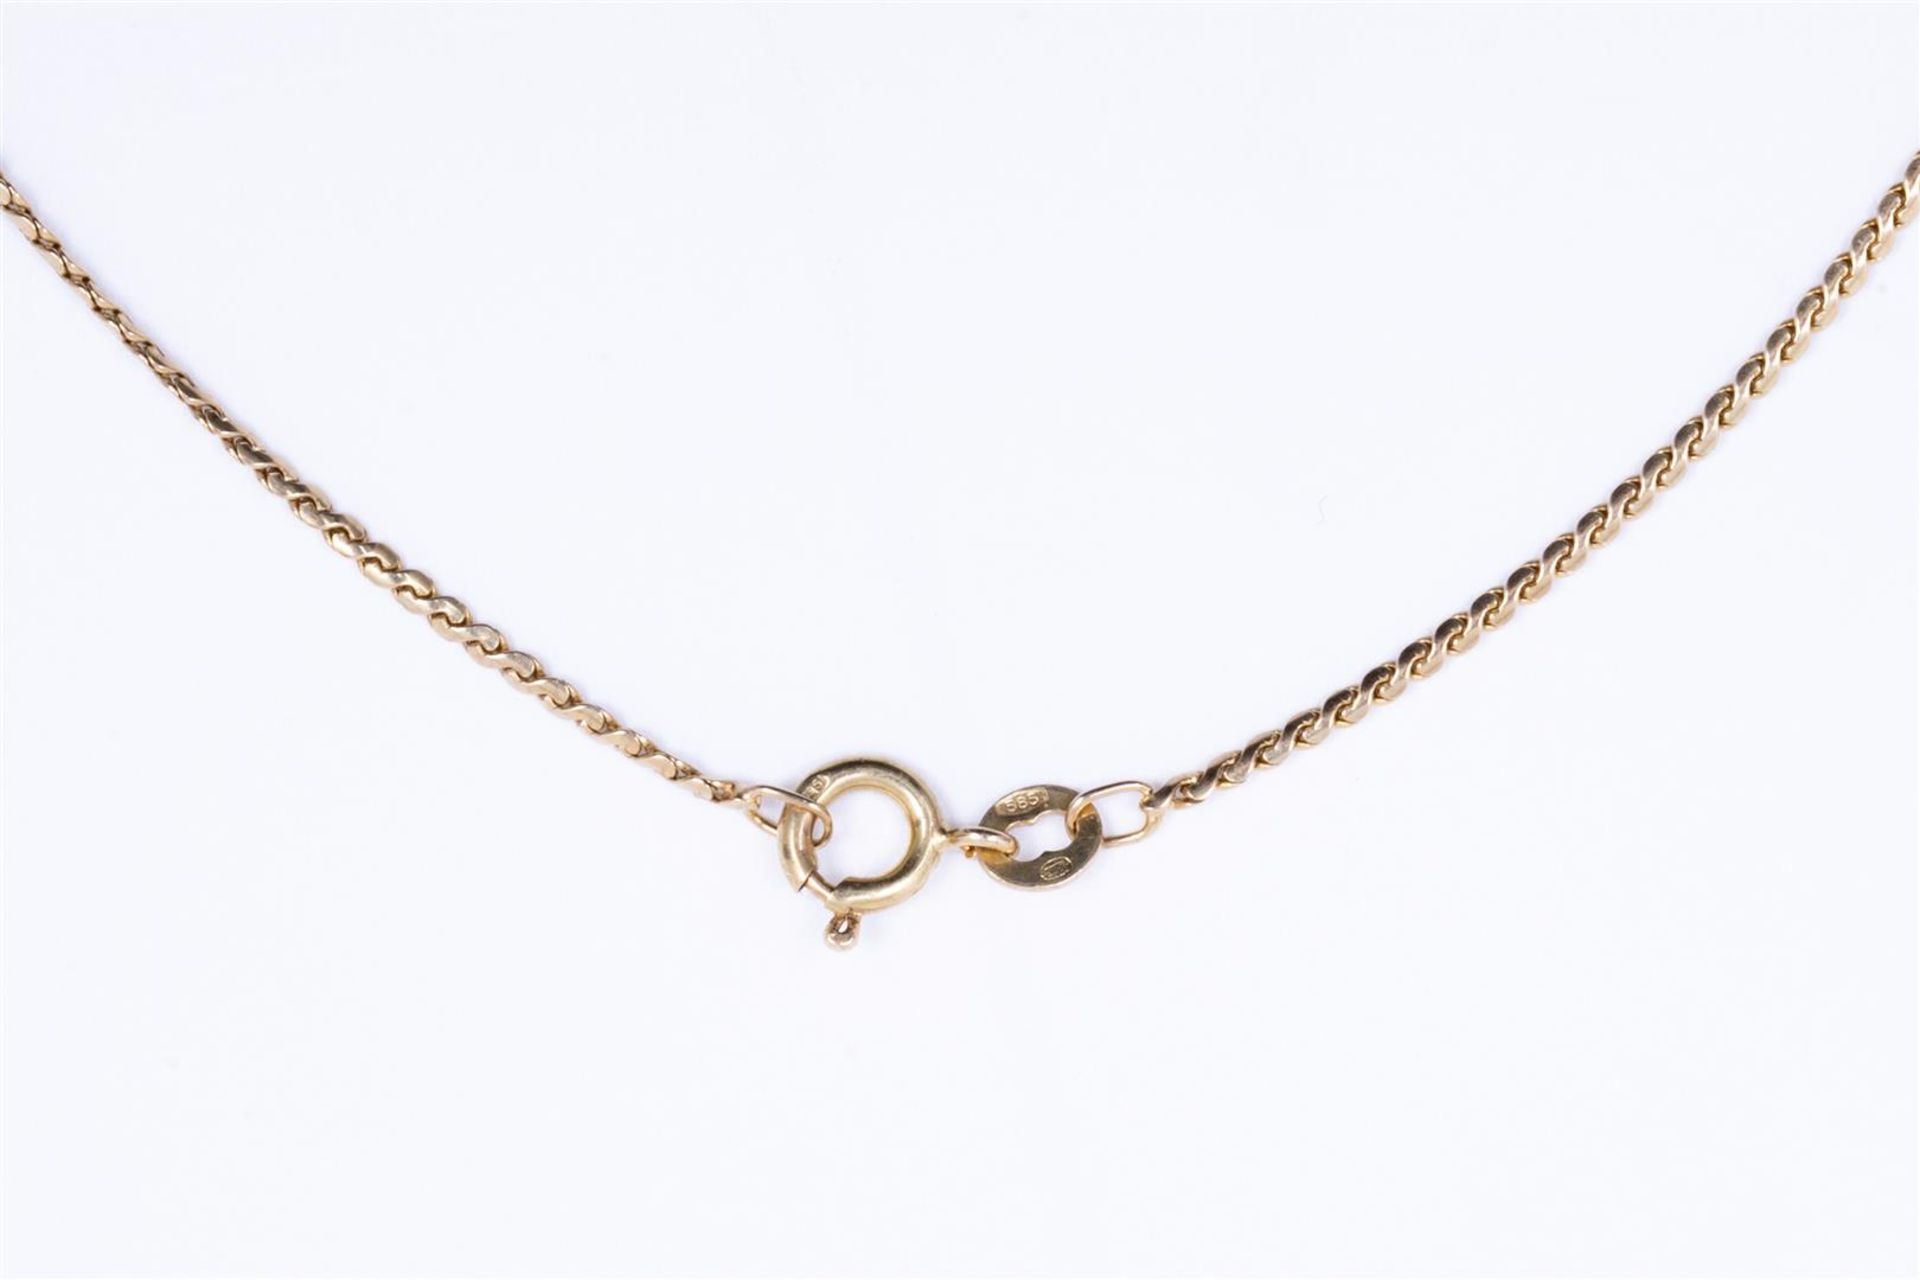 14kt yellow gold S-shape link necklace.
Length: 43.5 cm
Link width: 1.35 - 1.40 mm.
Inspection marks - Bild 3 aus 3